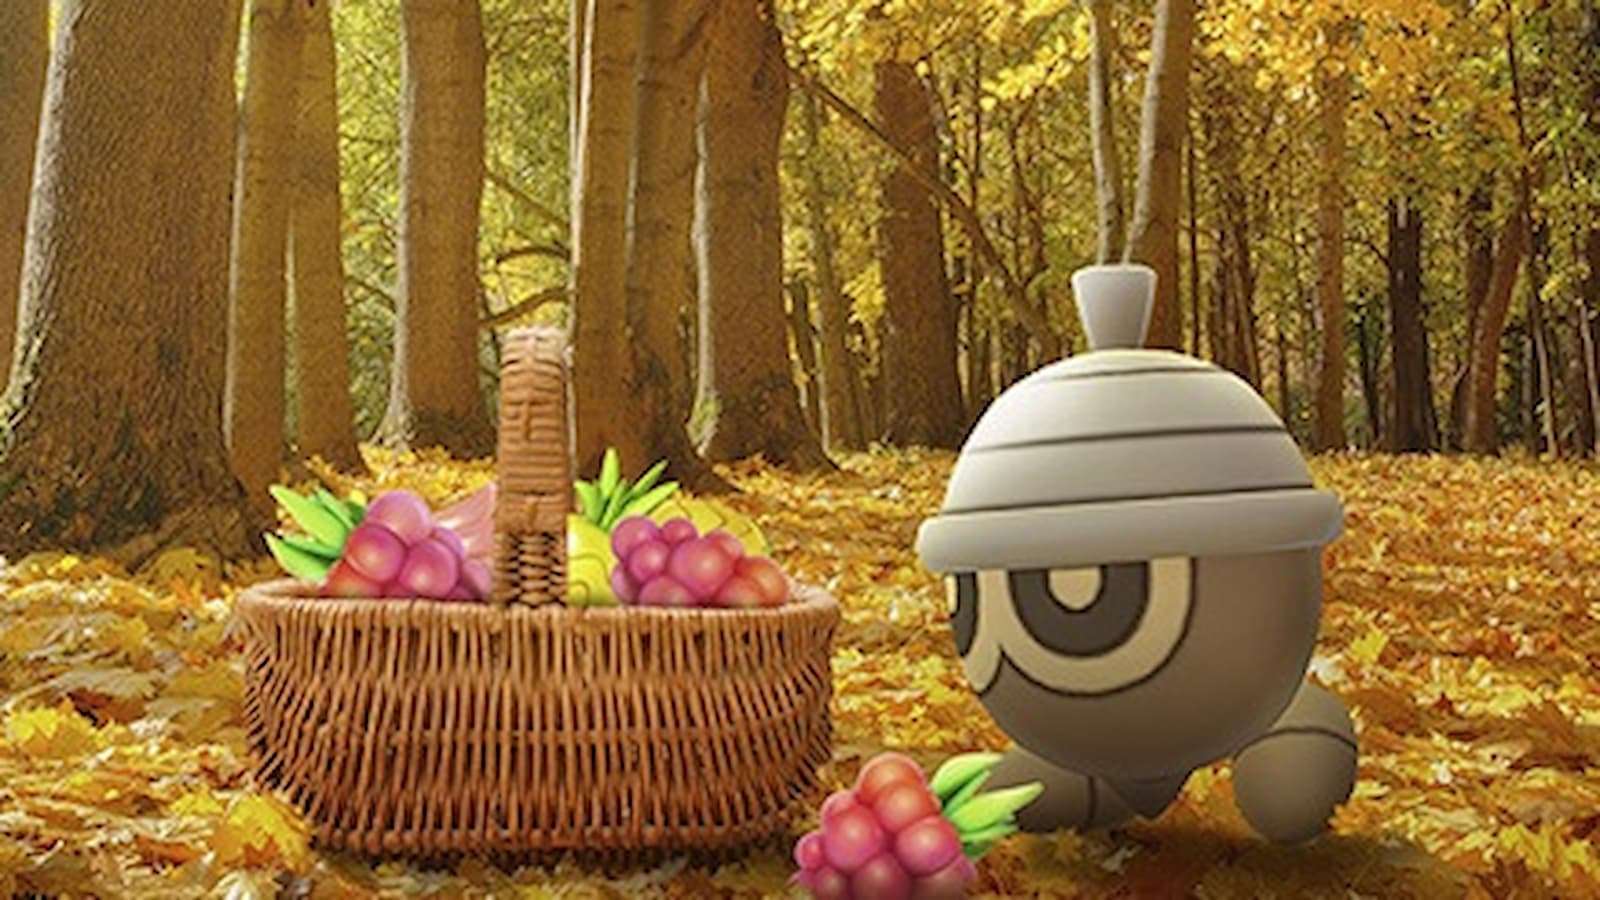 Seedot gathering berries in Pokemon Go